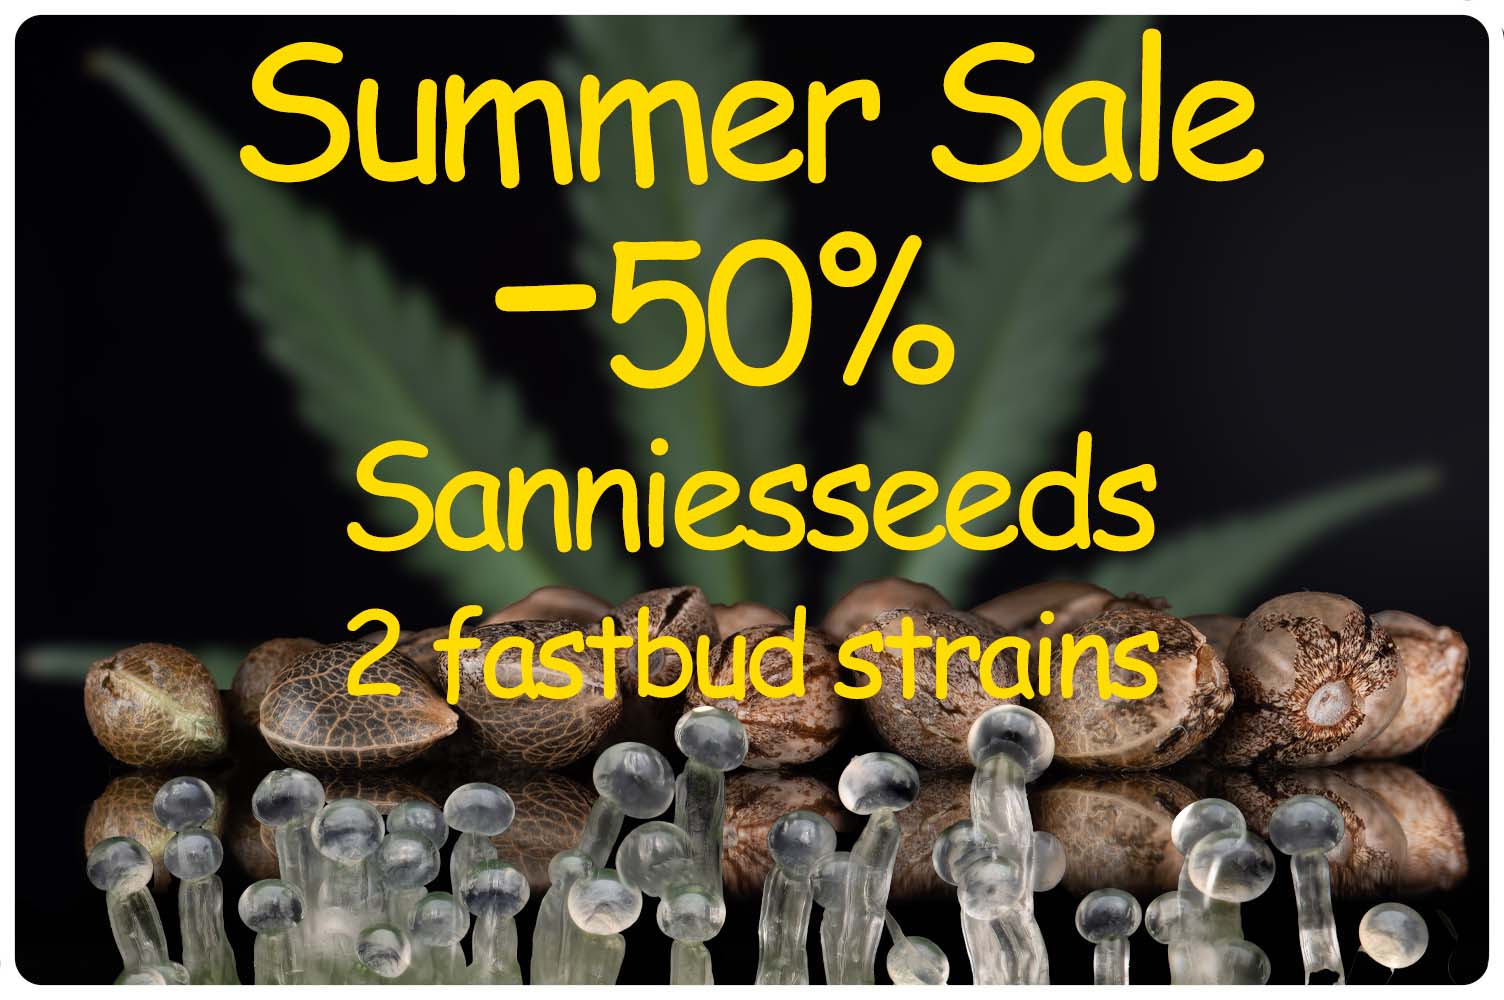 Summer sale 50% discount